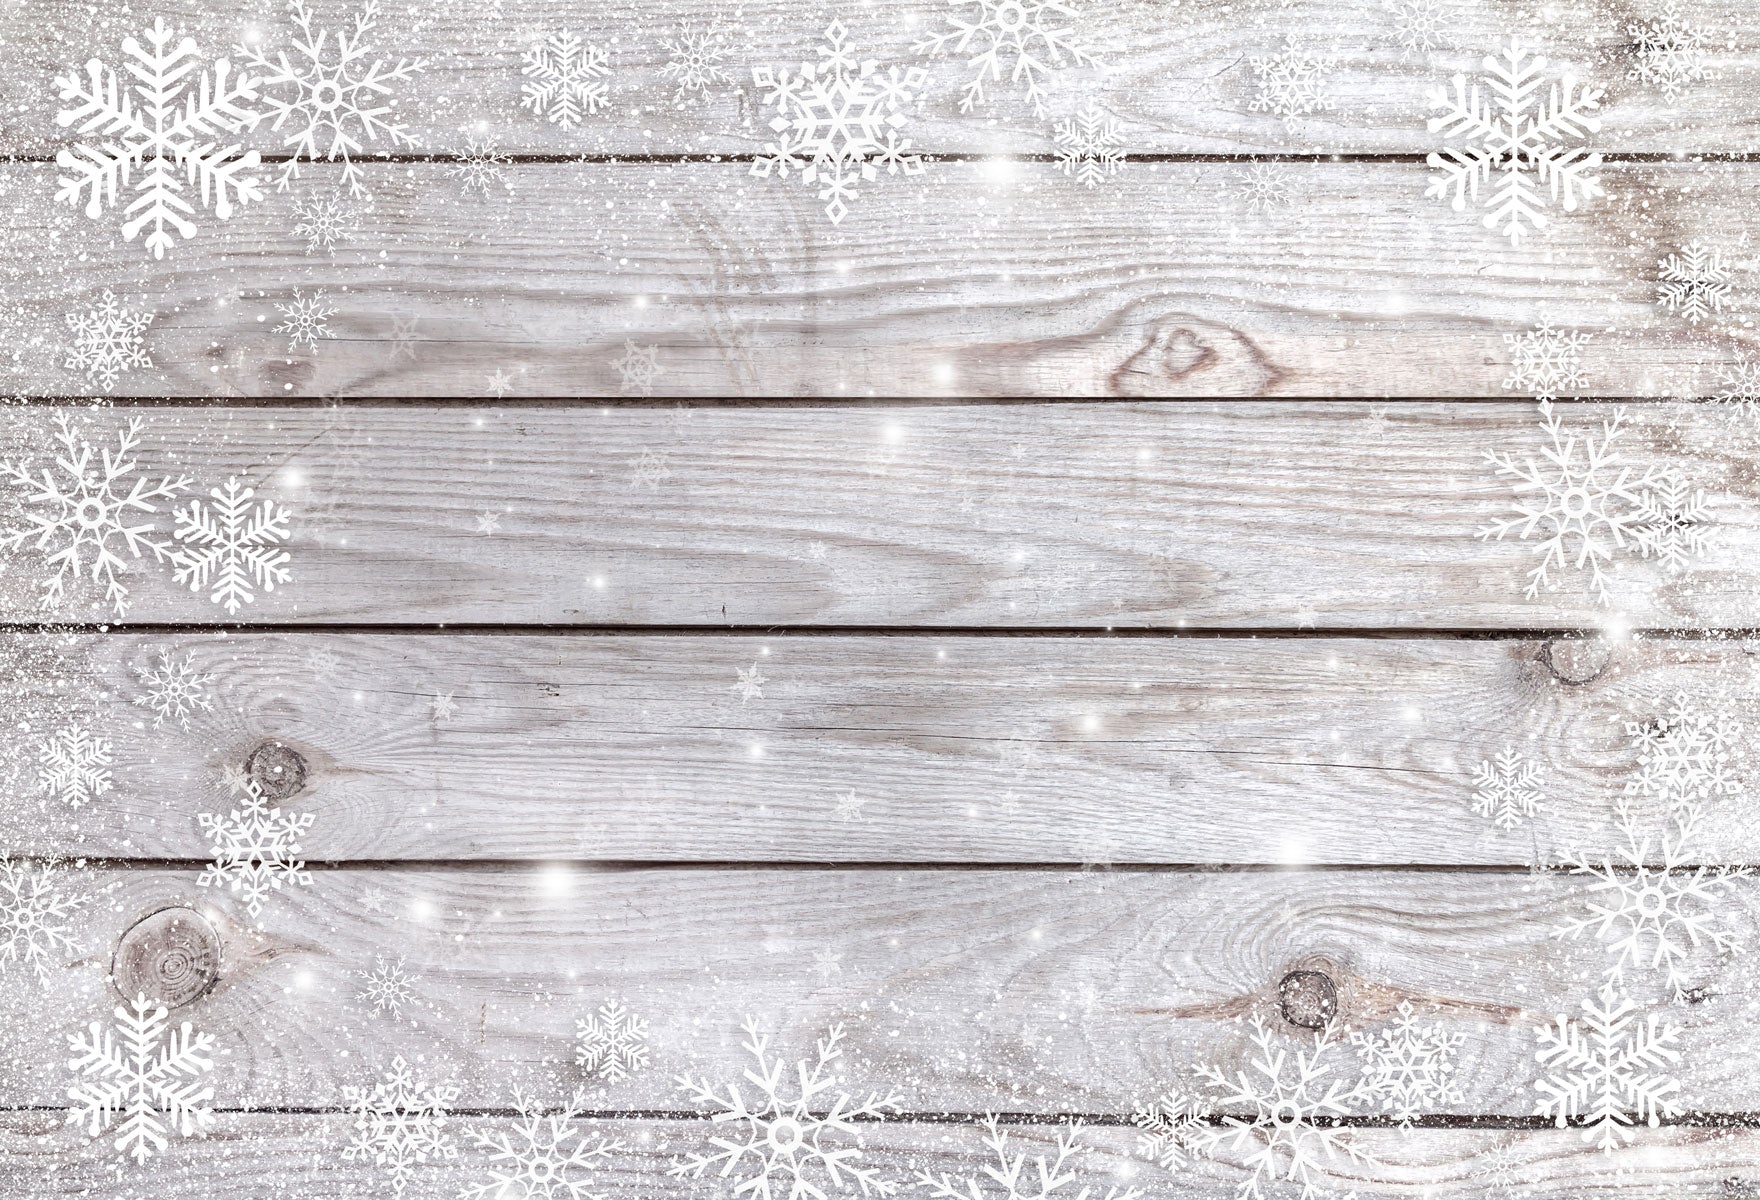 Kate Christmas Winter Snowflake Wood Floor Backdrops for Photography